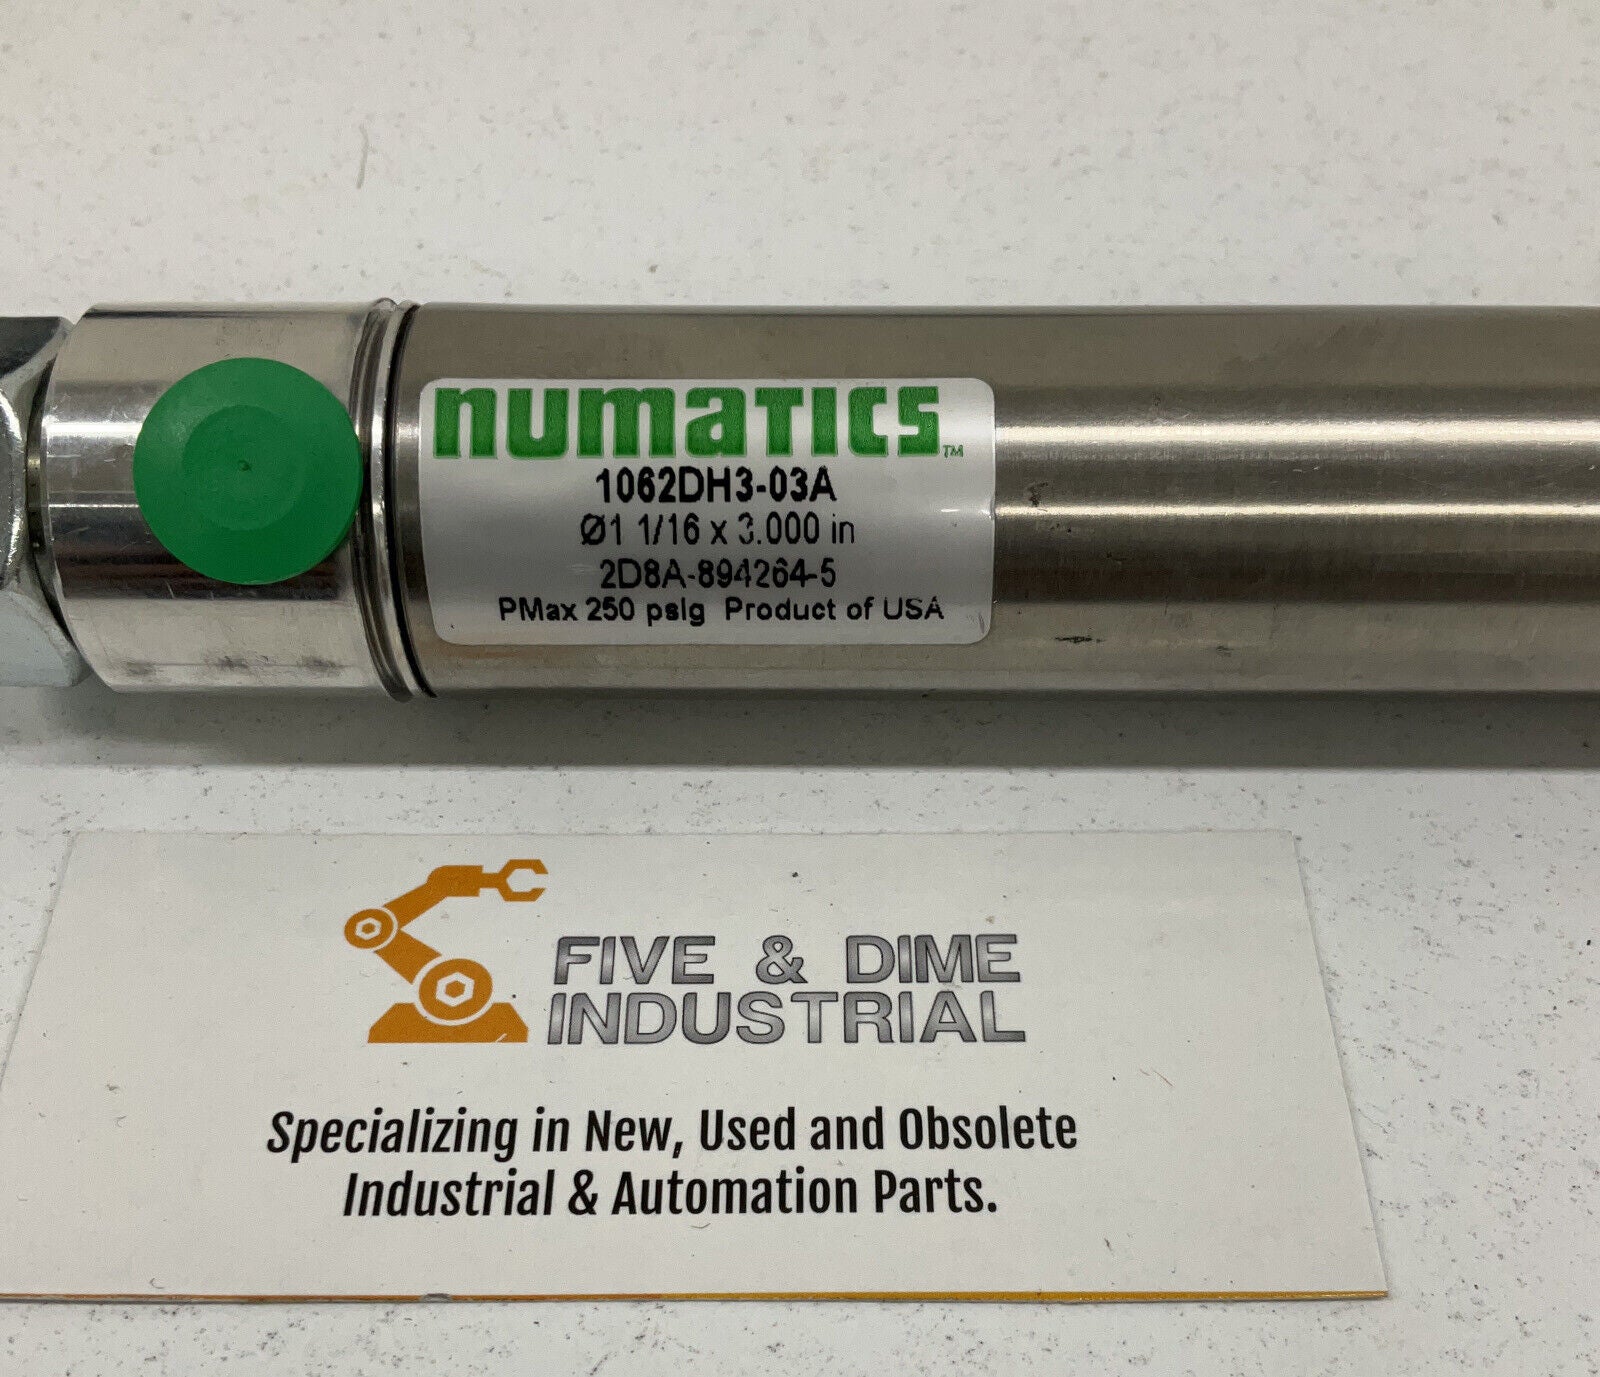 Numatics 1062DH3-03A New Pneumatic Cylinder 3" Stroke 250 PSI Max (BL219) - 0